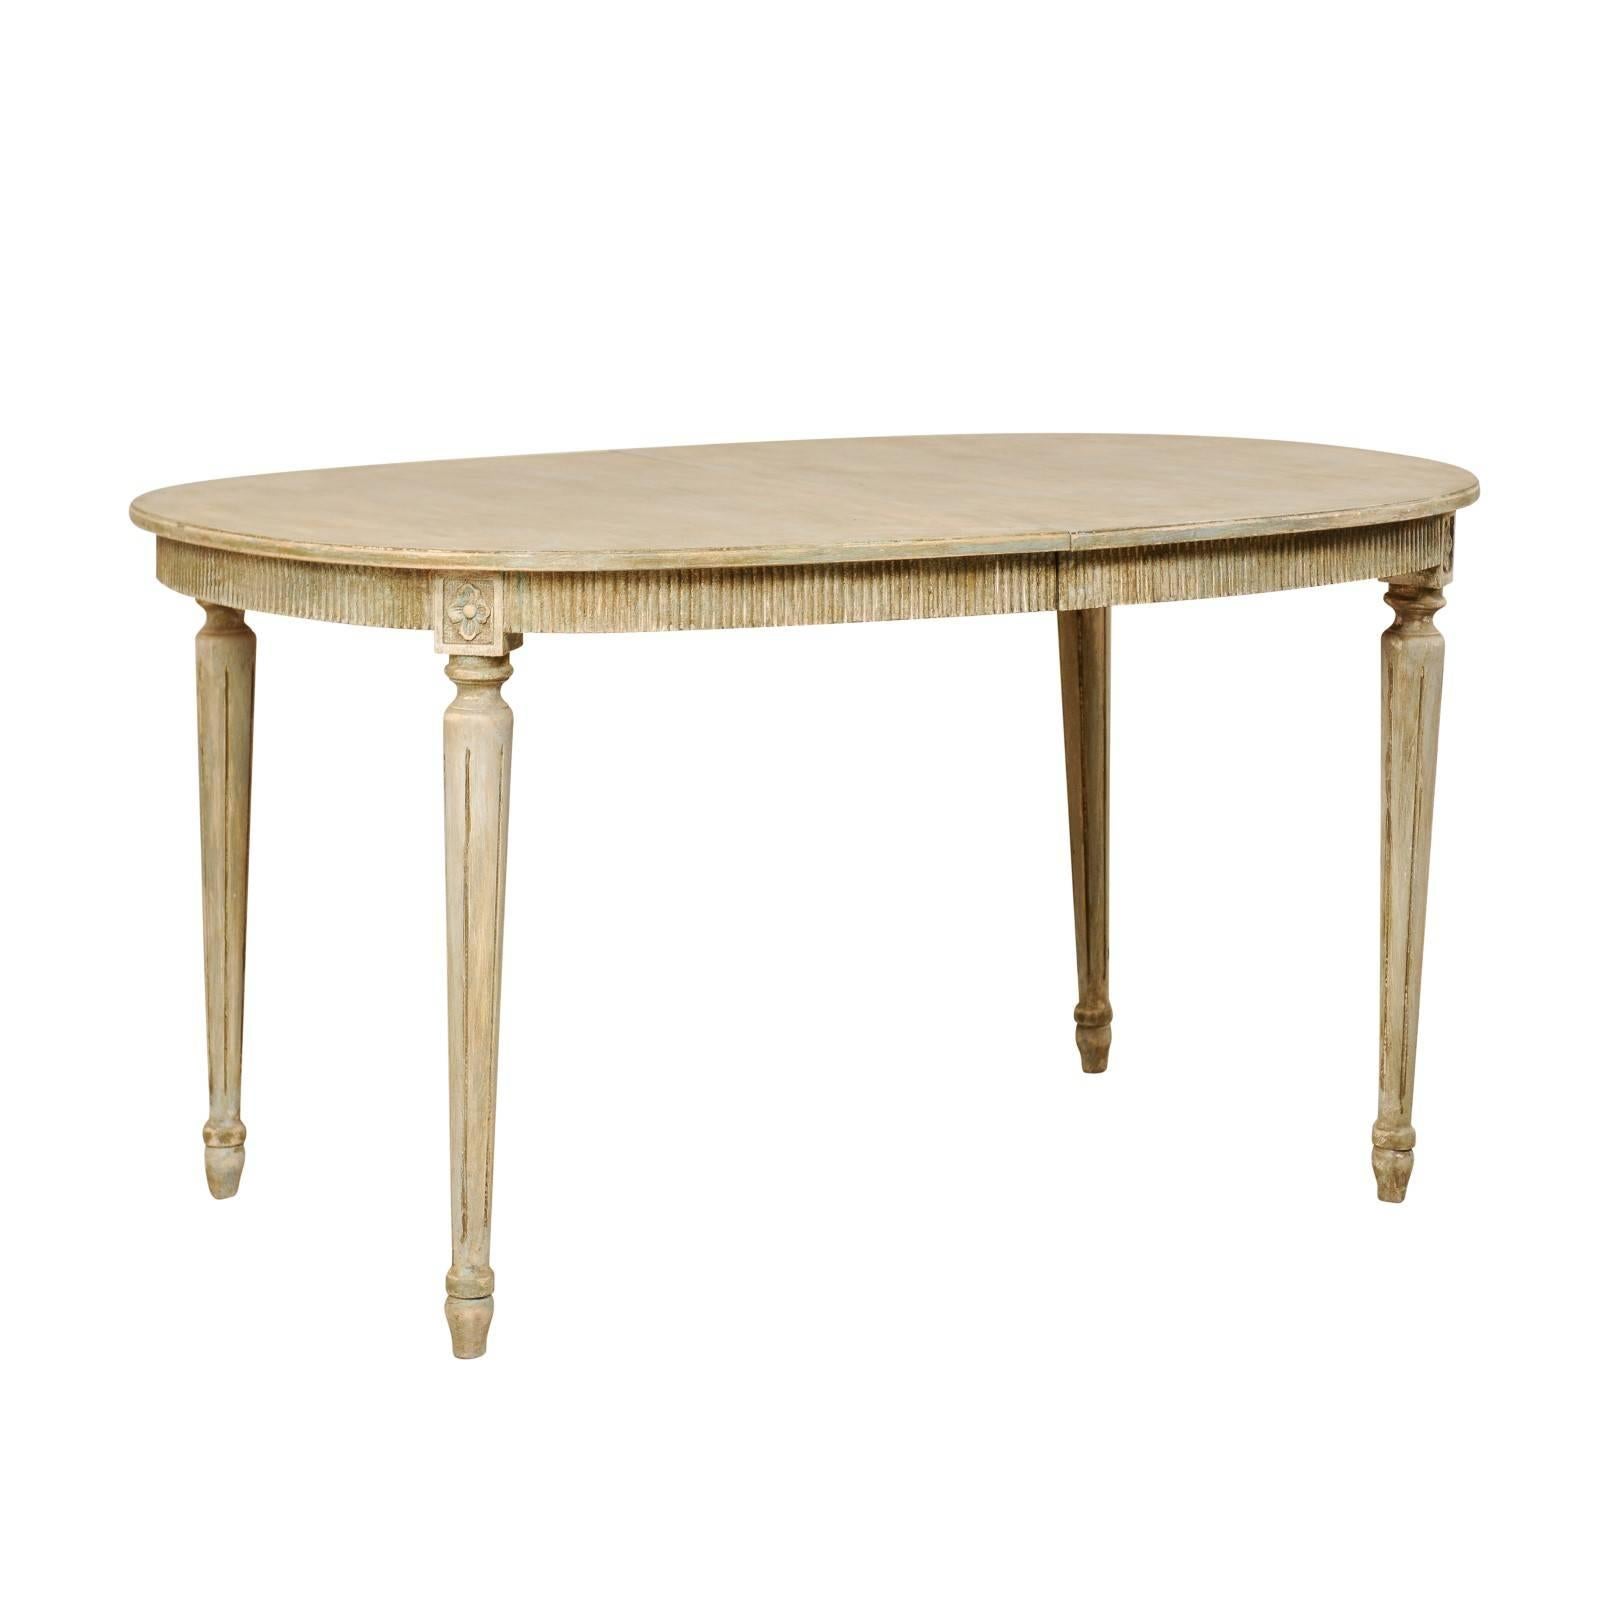 Swedish Gustavian Style Vintage Painted Wood Medium Size Oval Table